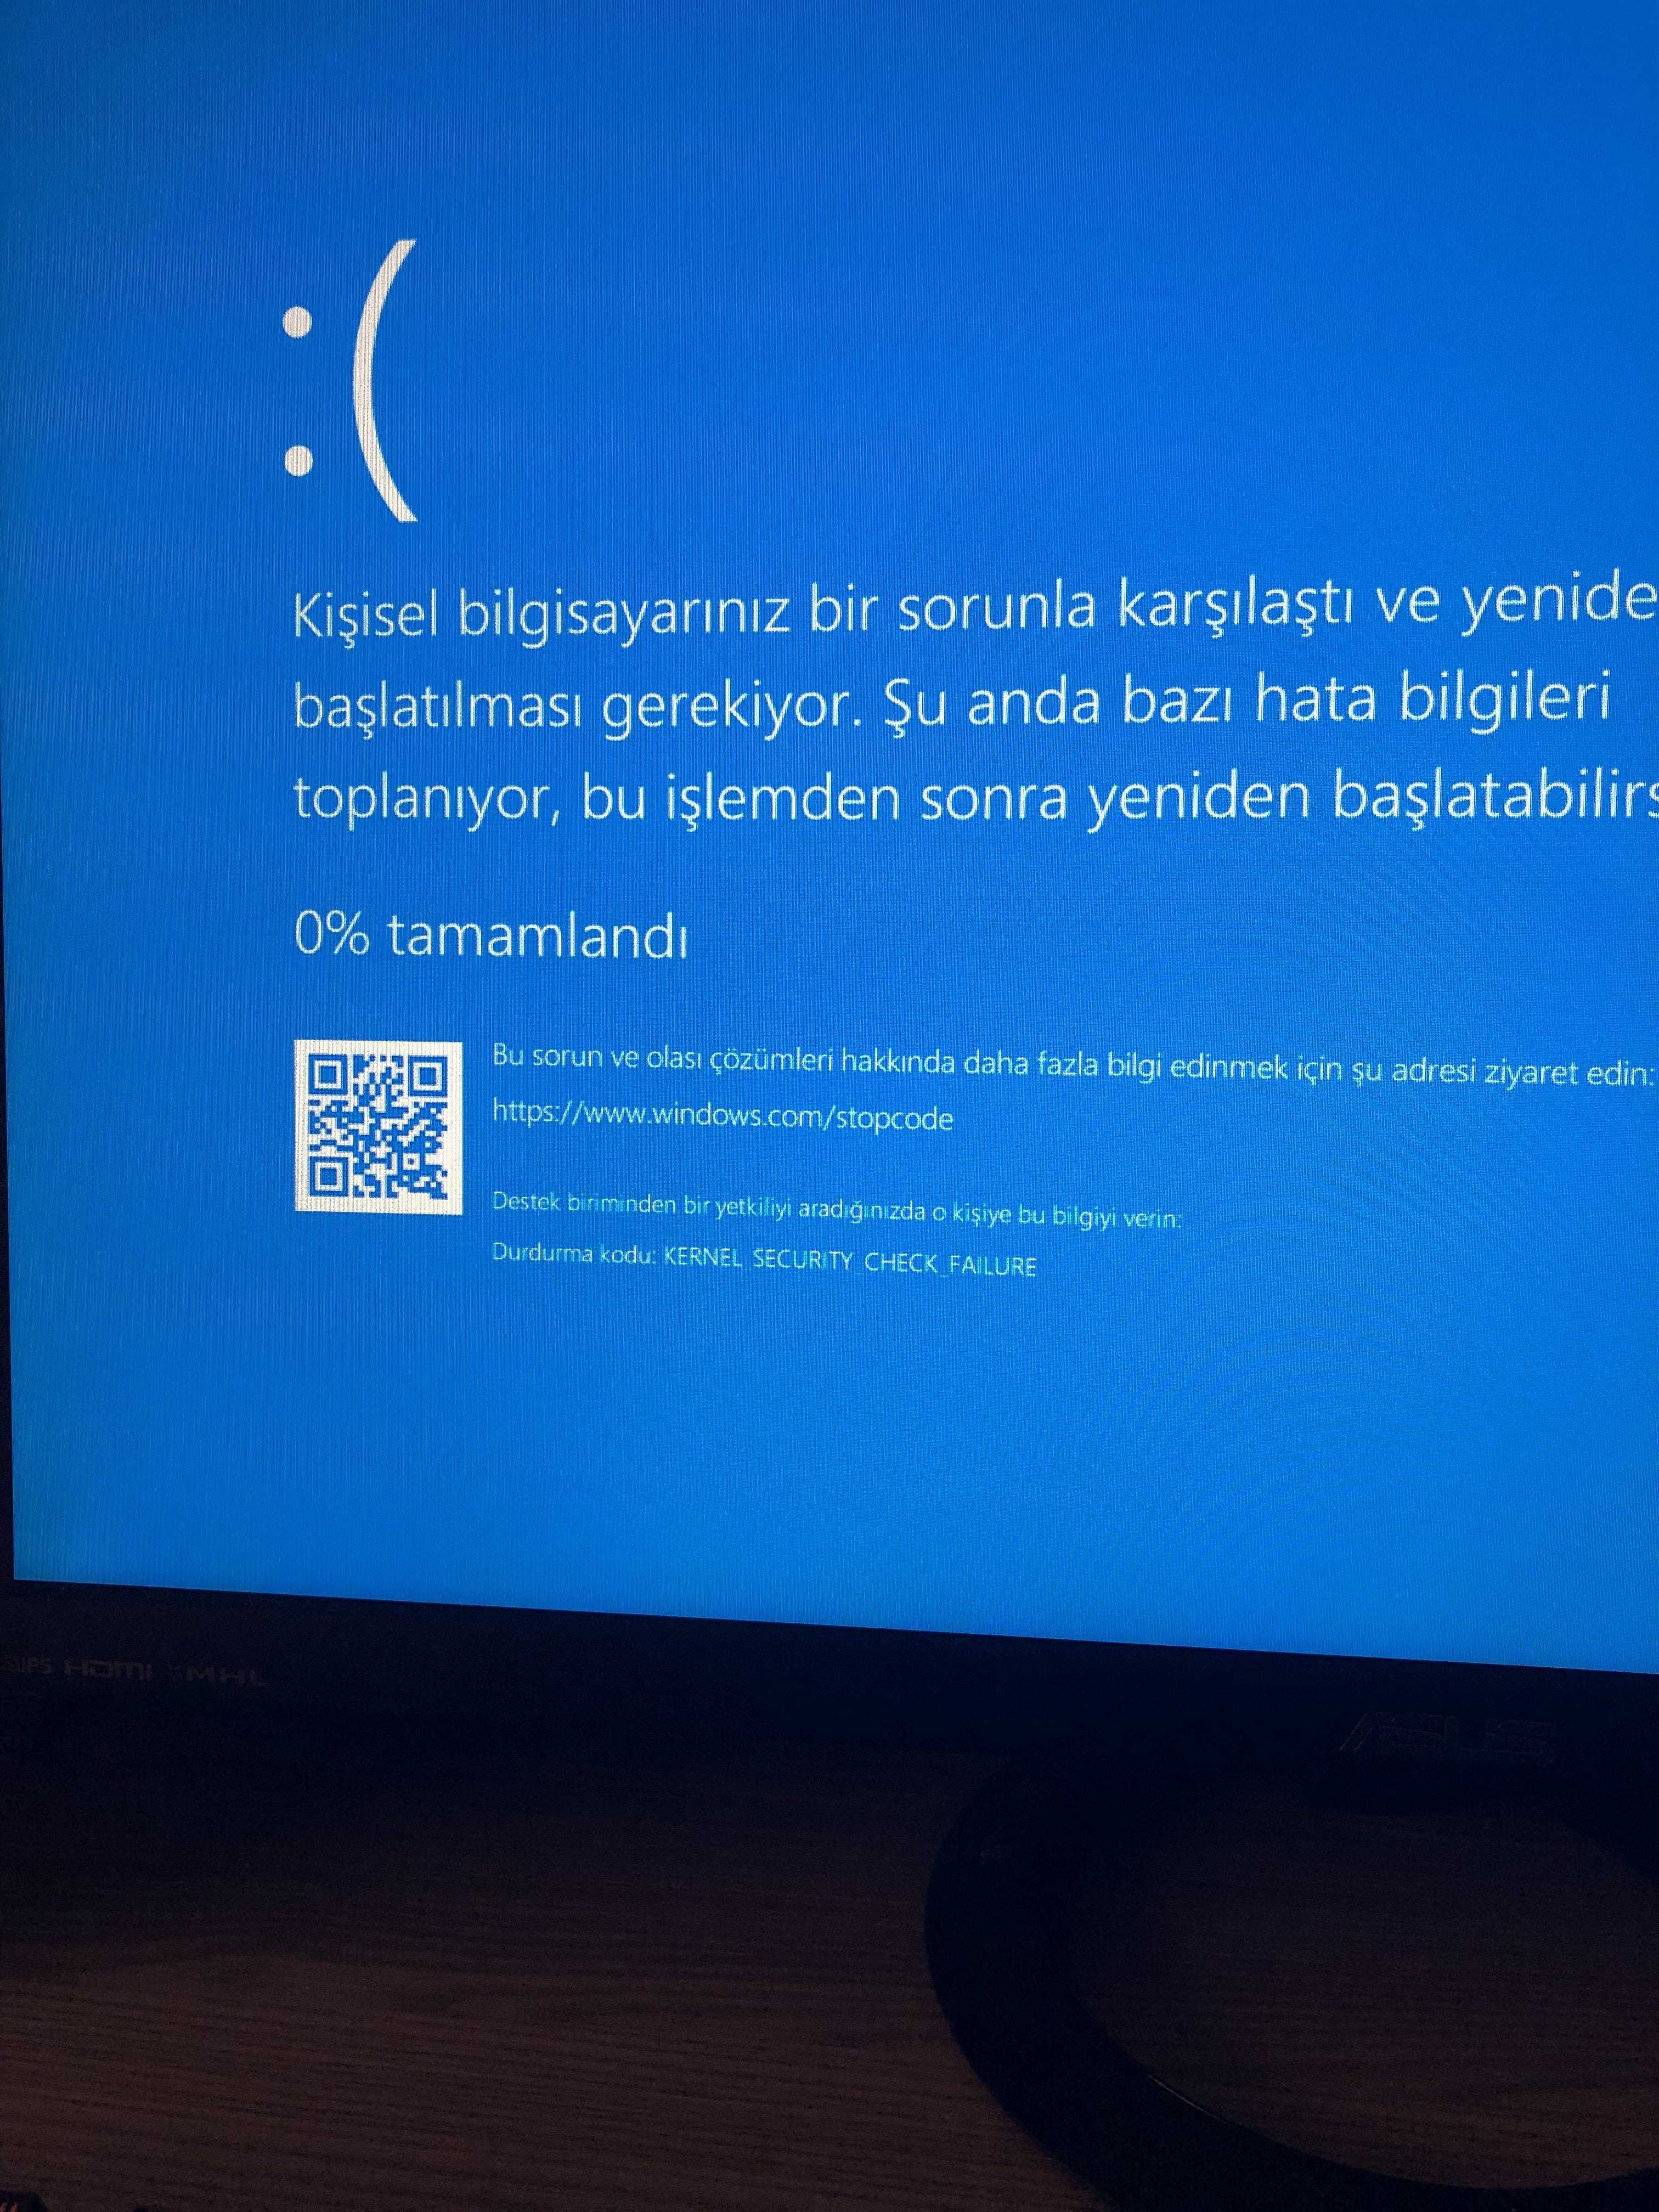 Kernel security check failure error in windows 10